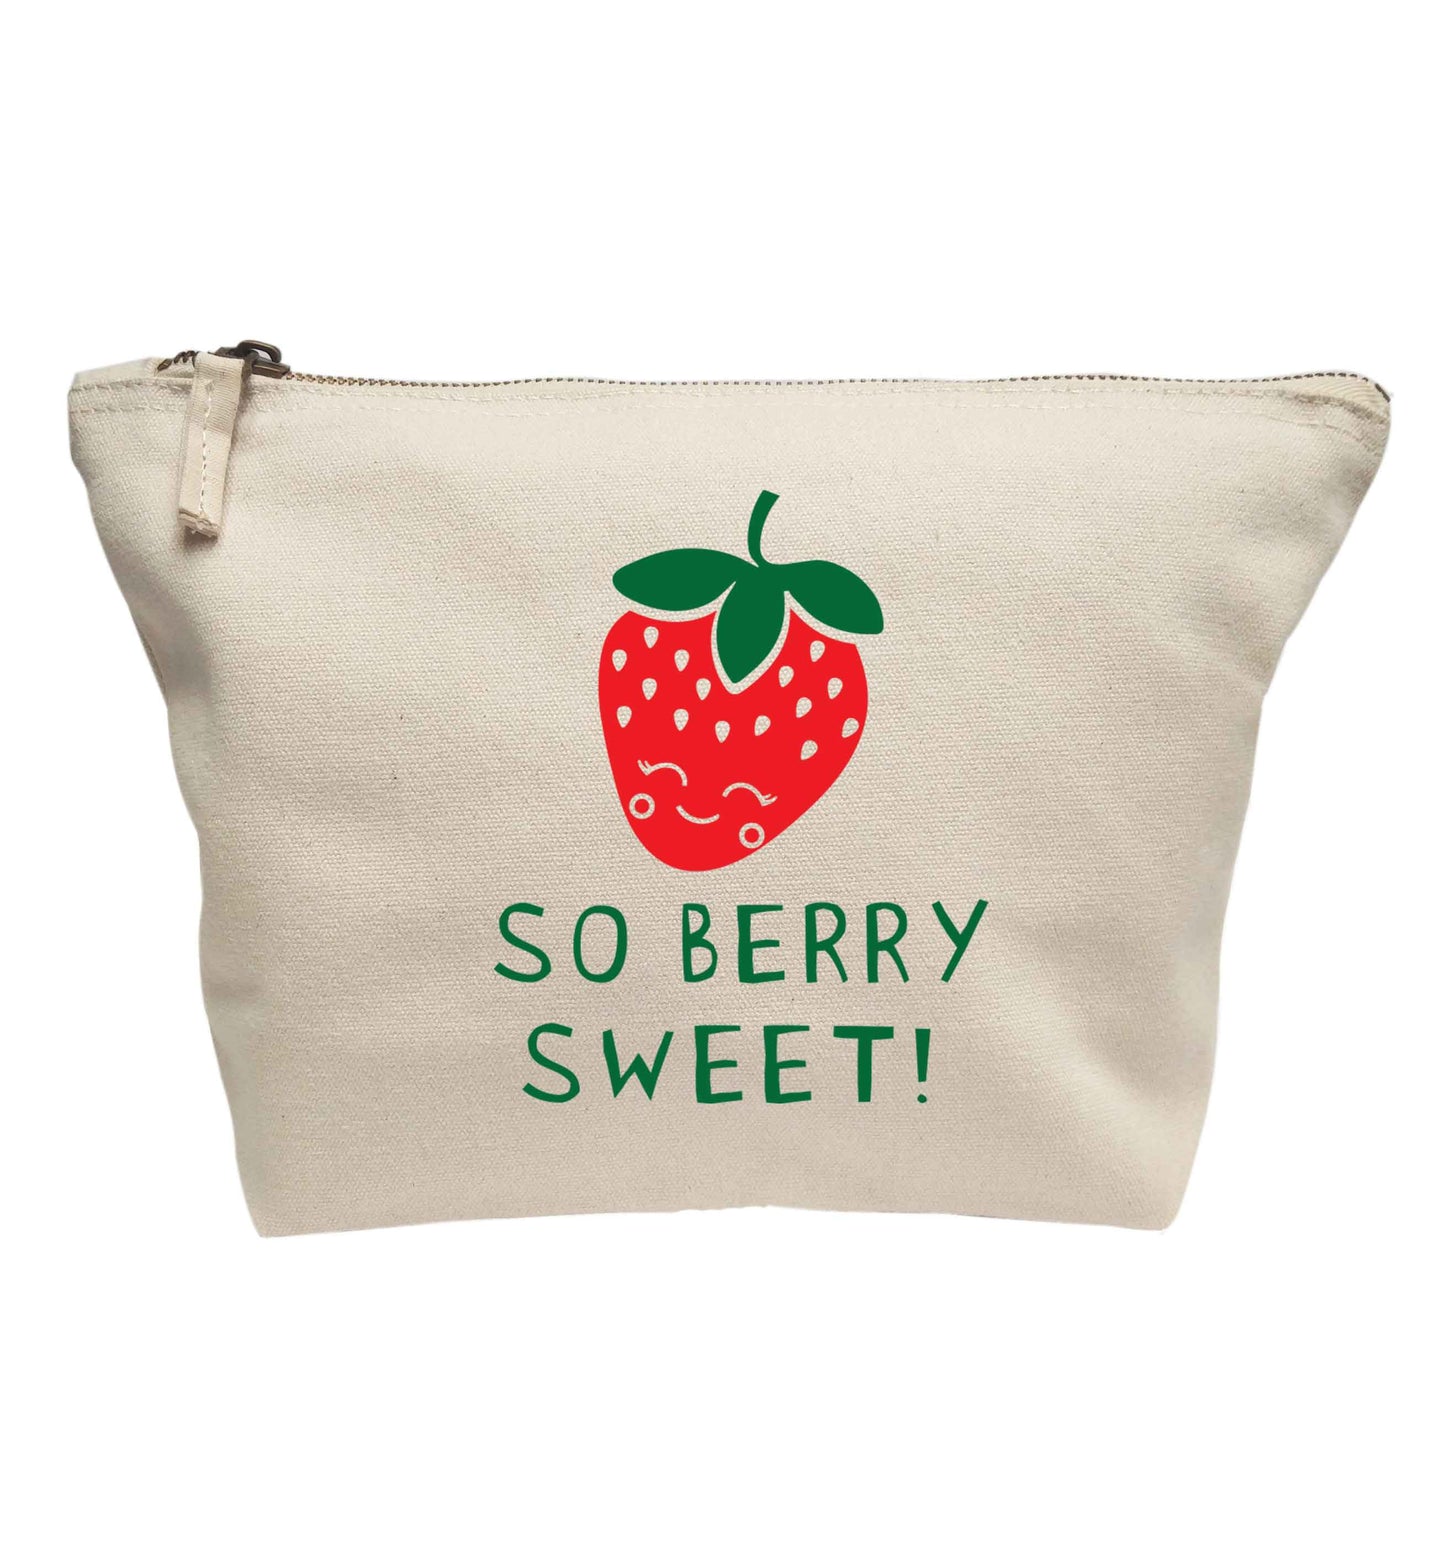 So berry sweet | Makeup / wash bag